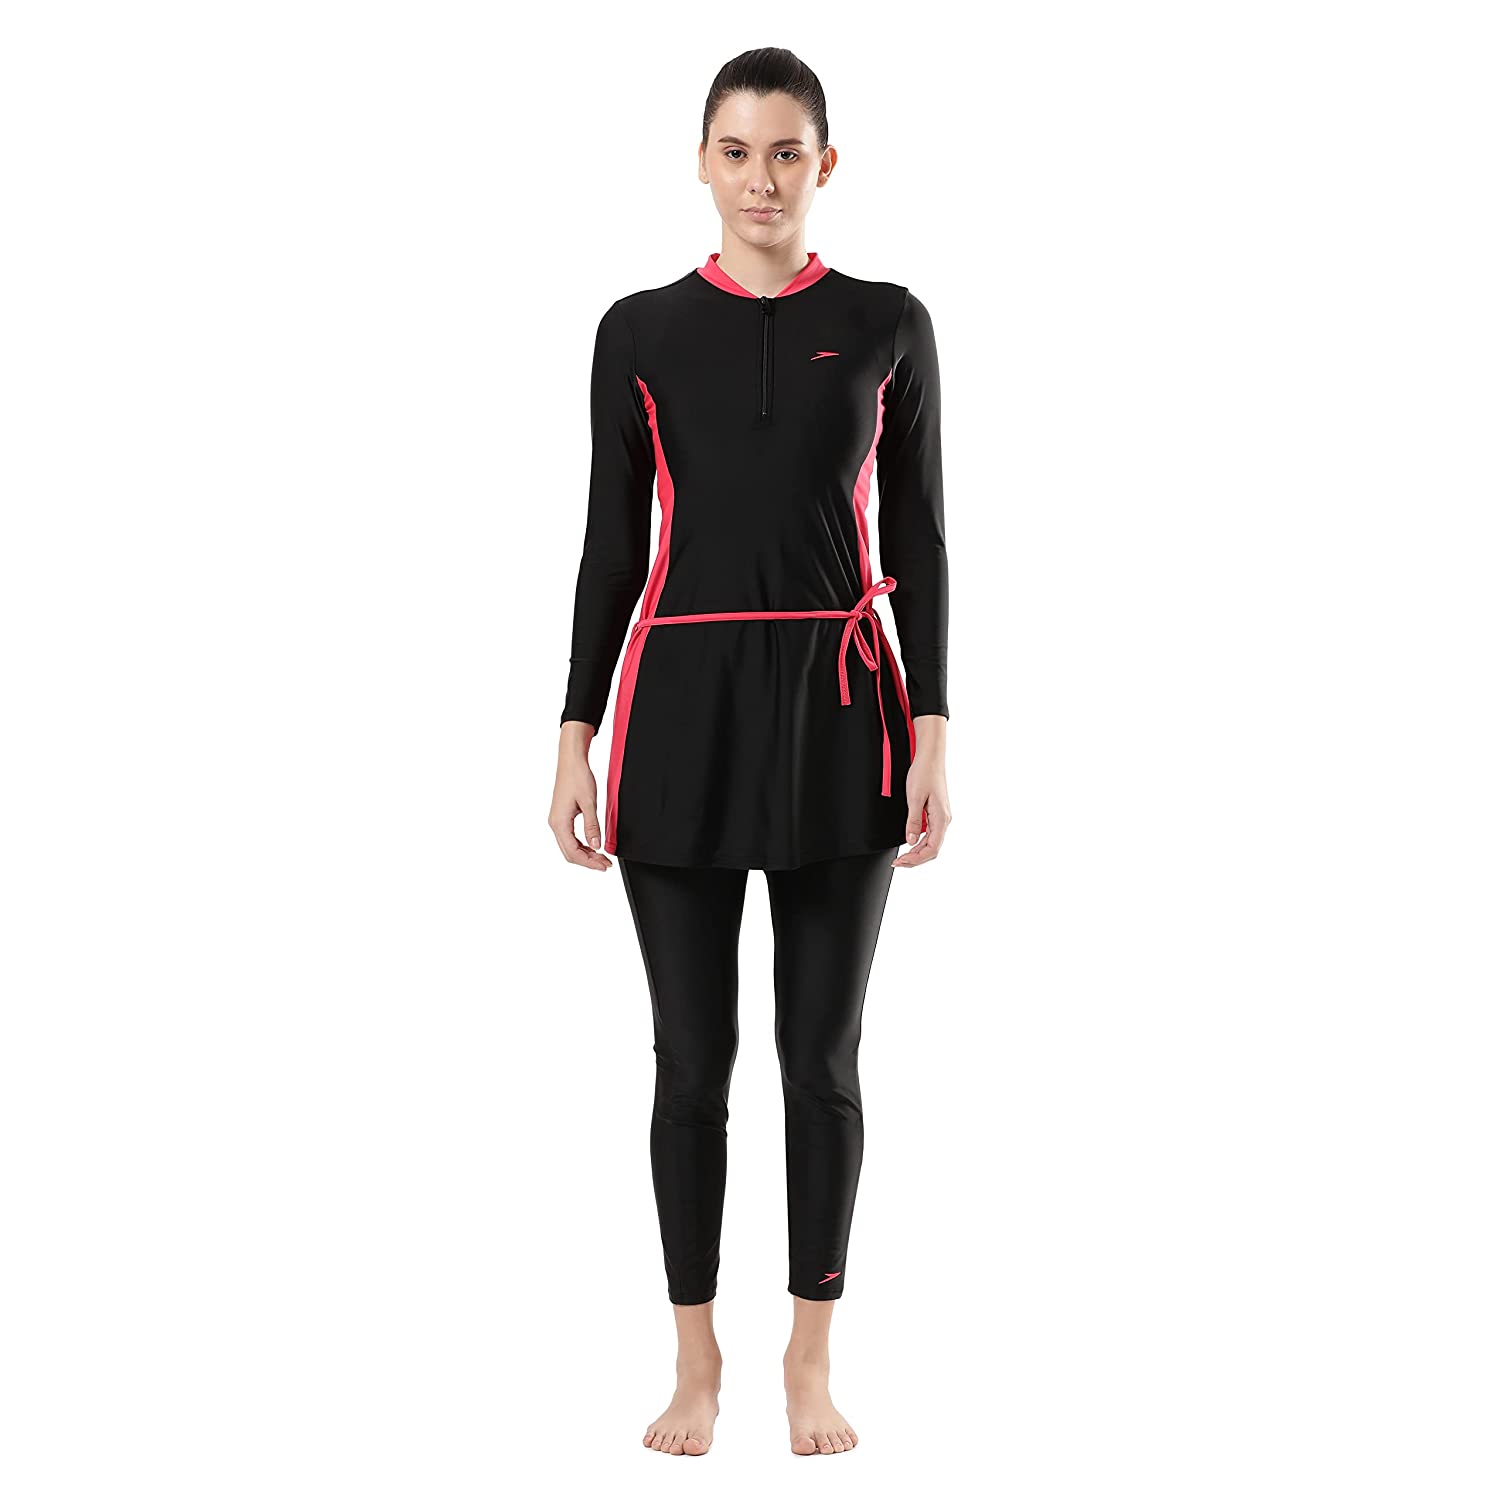 Speedo Female Two-Piece Full Body Suit For Women (Black/Raspberry Fill) - Best Price online Prokicksports.com